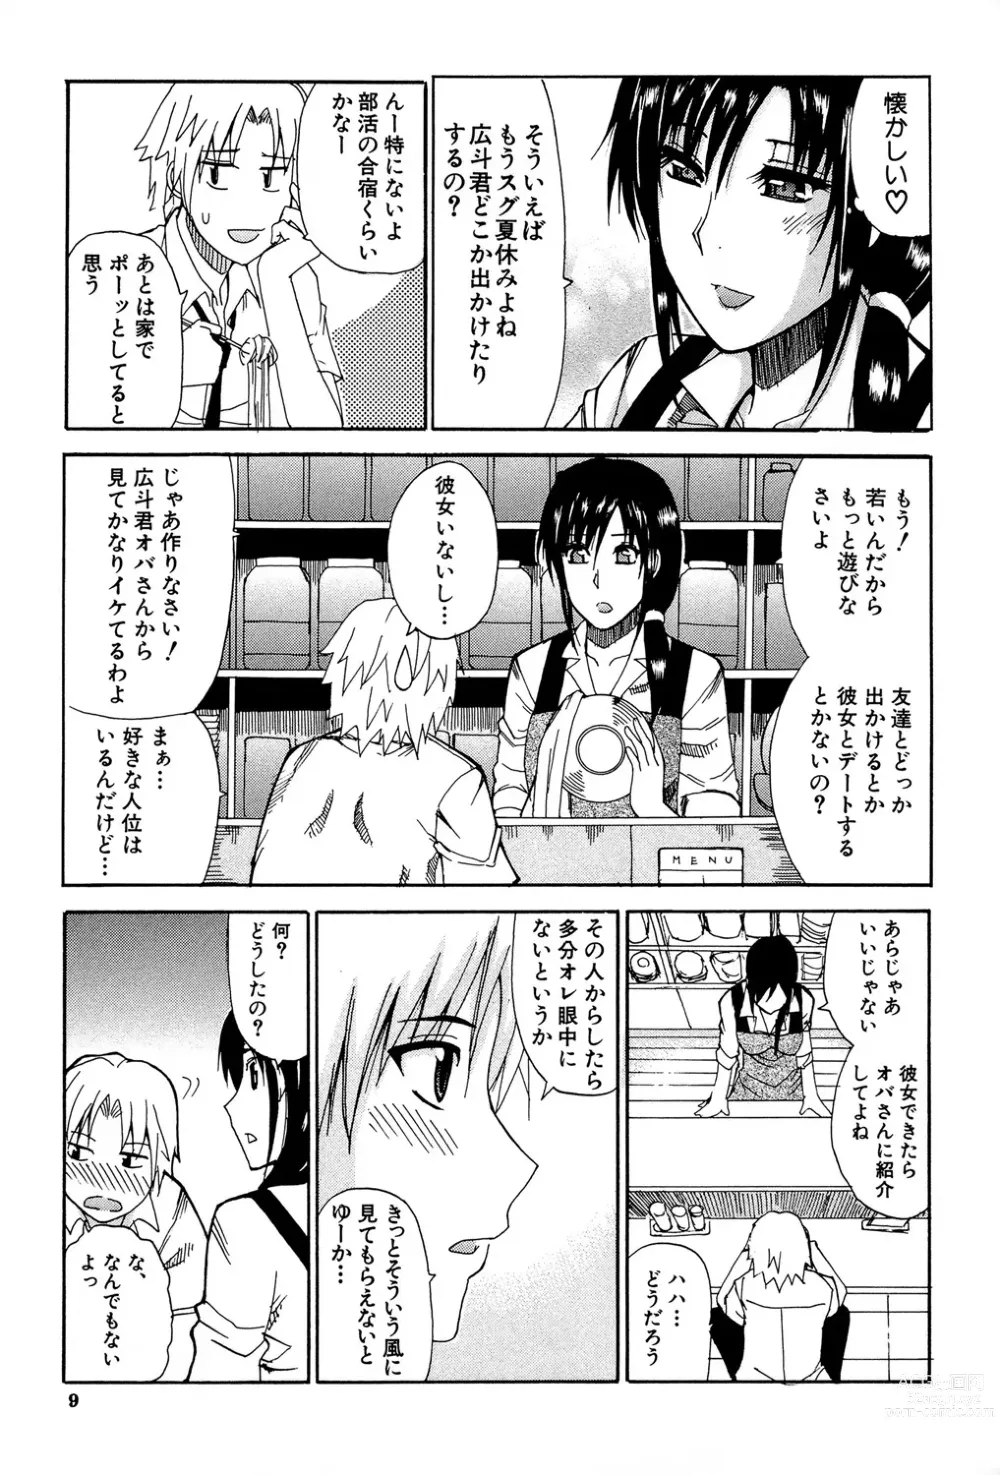 Page 8 of manga Venus Rhapsody